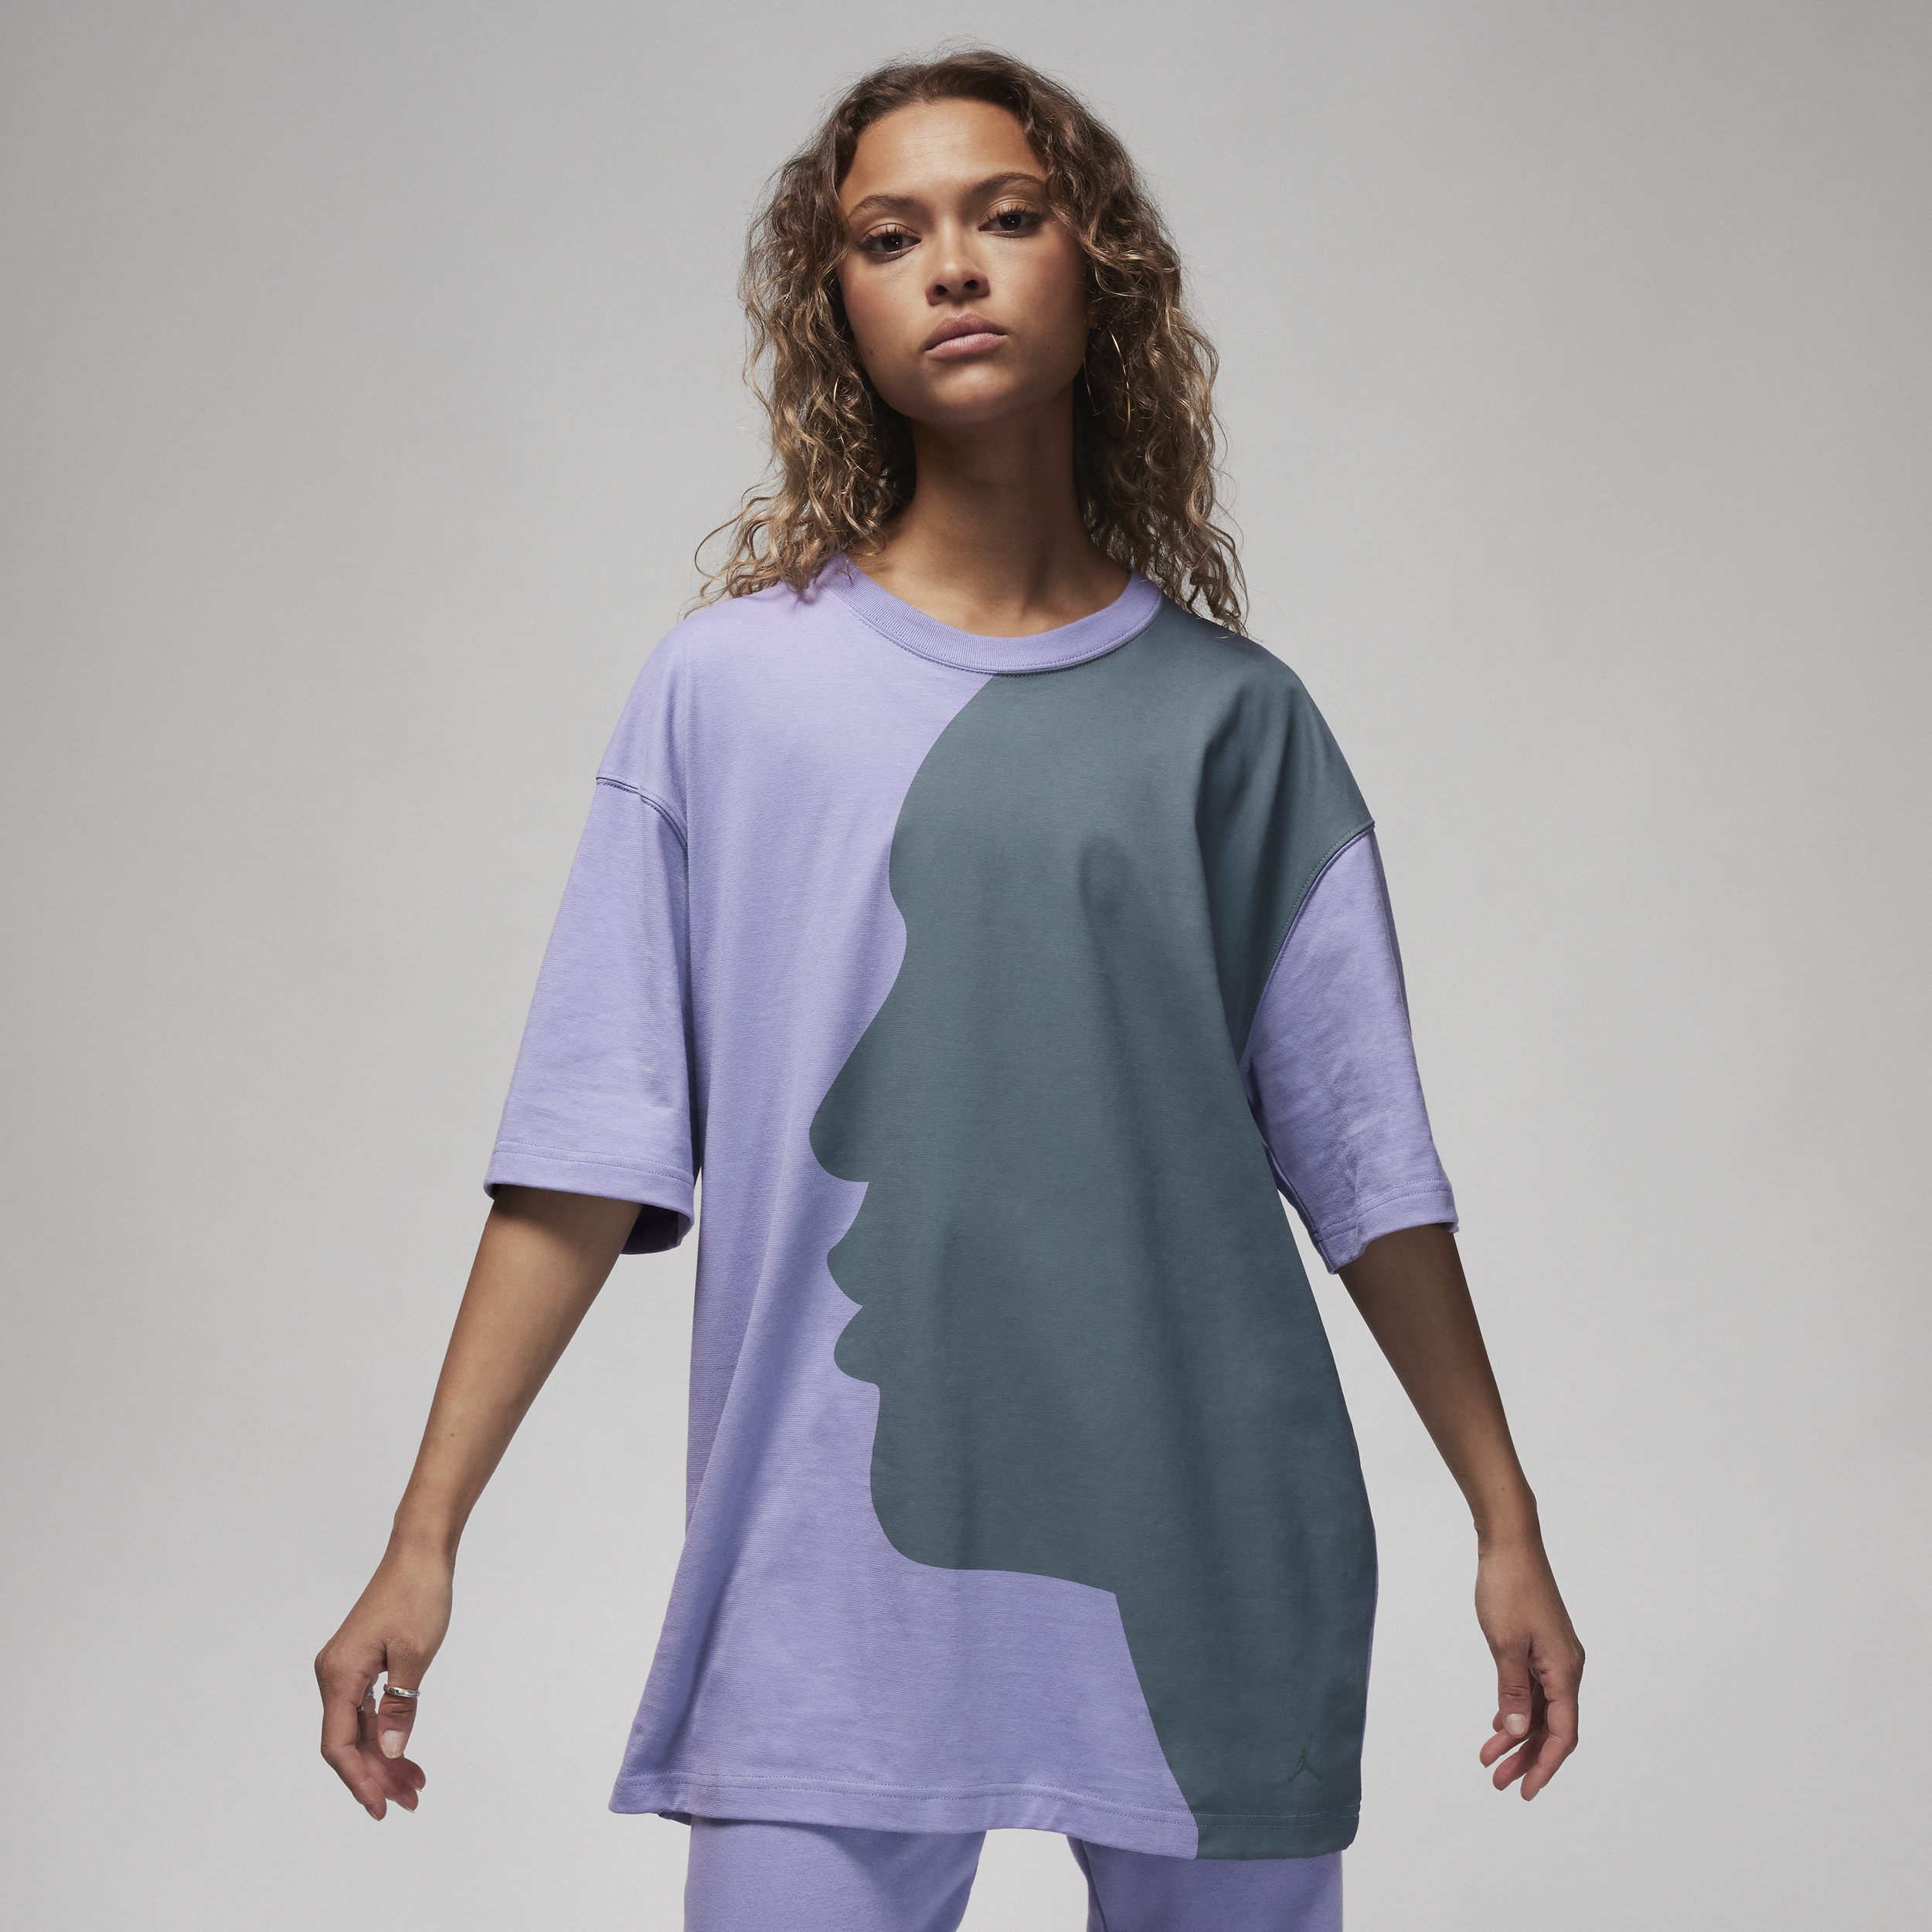 Nike T-shirt oversize con grafica Jordan – Donna - Viola